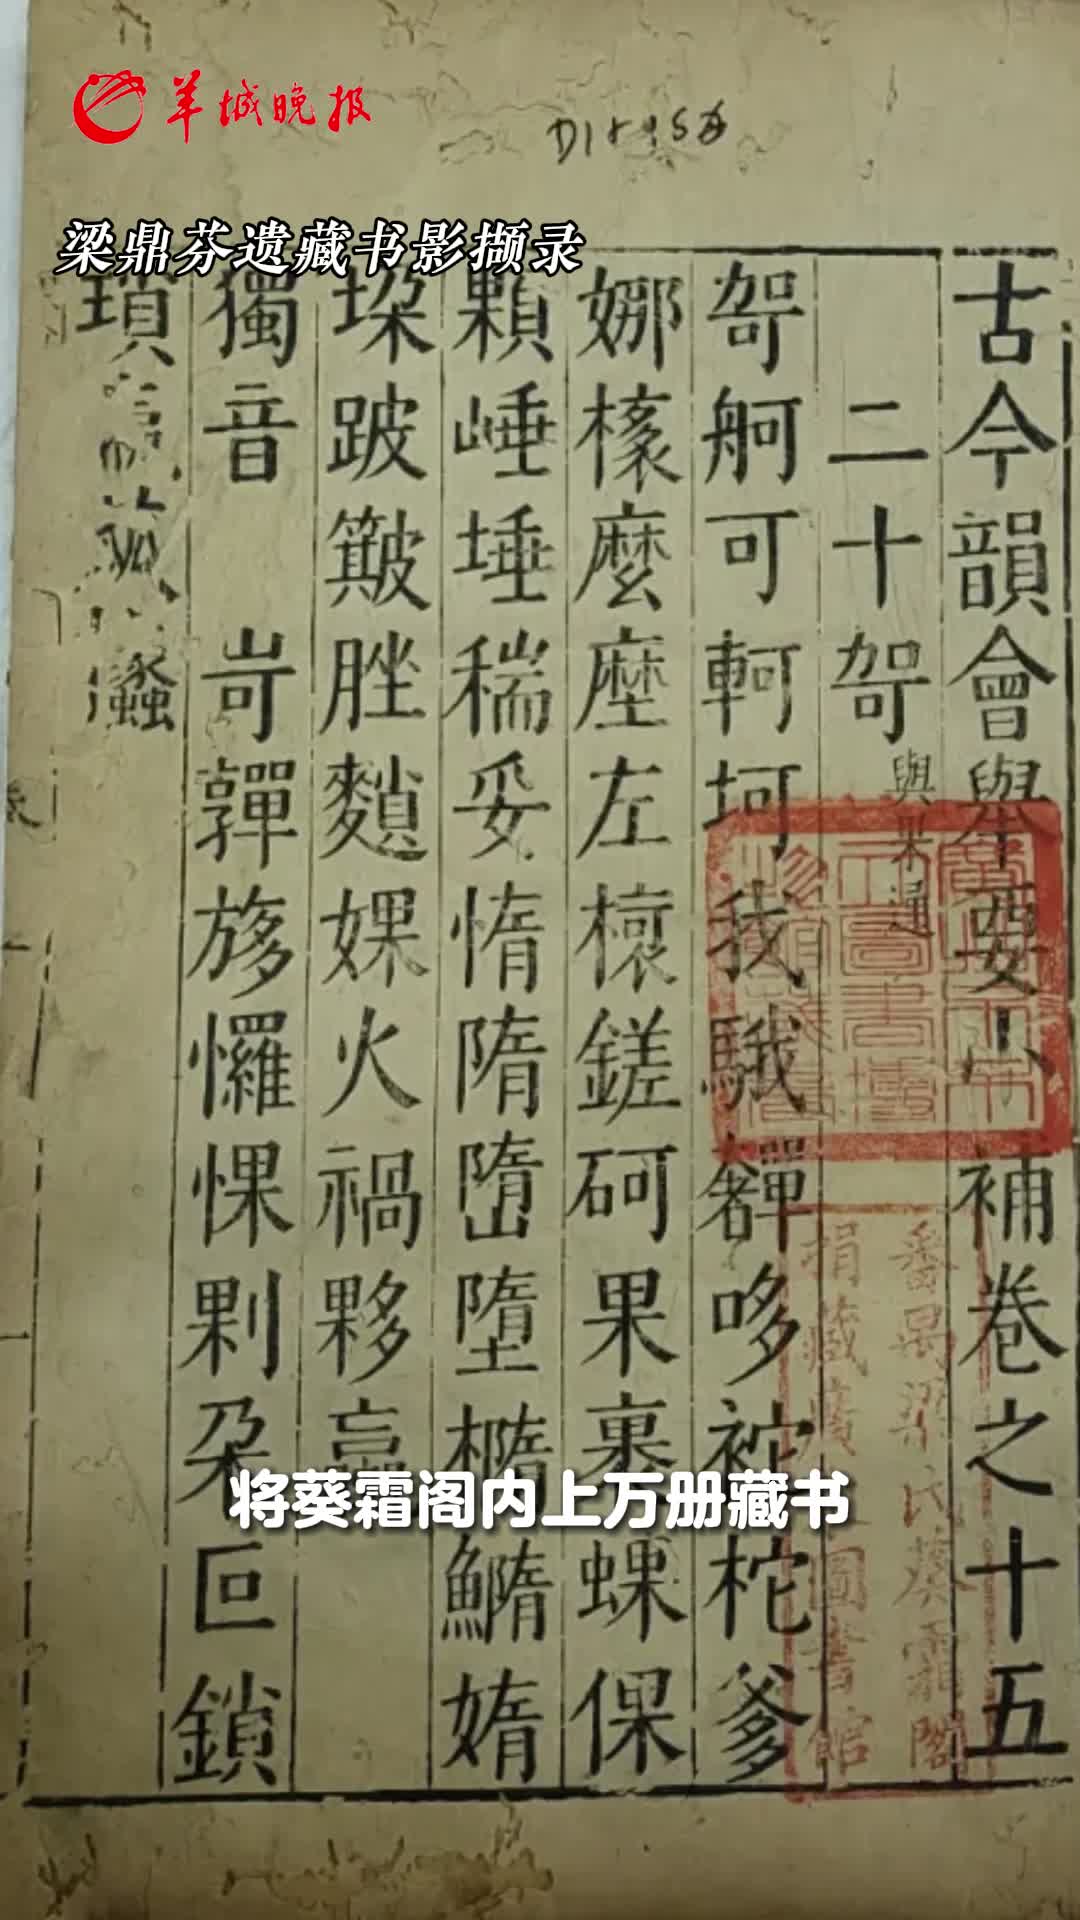 Lingnan Talk | Visit a lost libraryin Guangzhou.